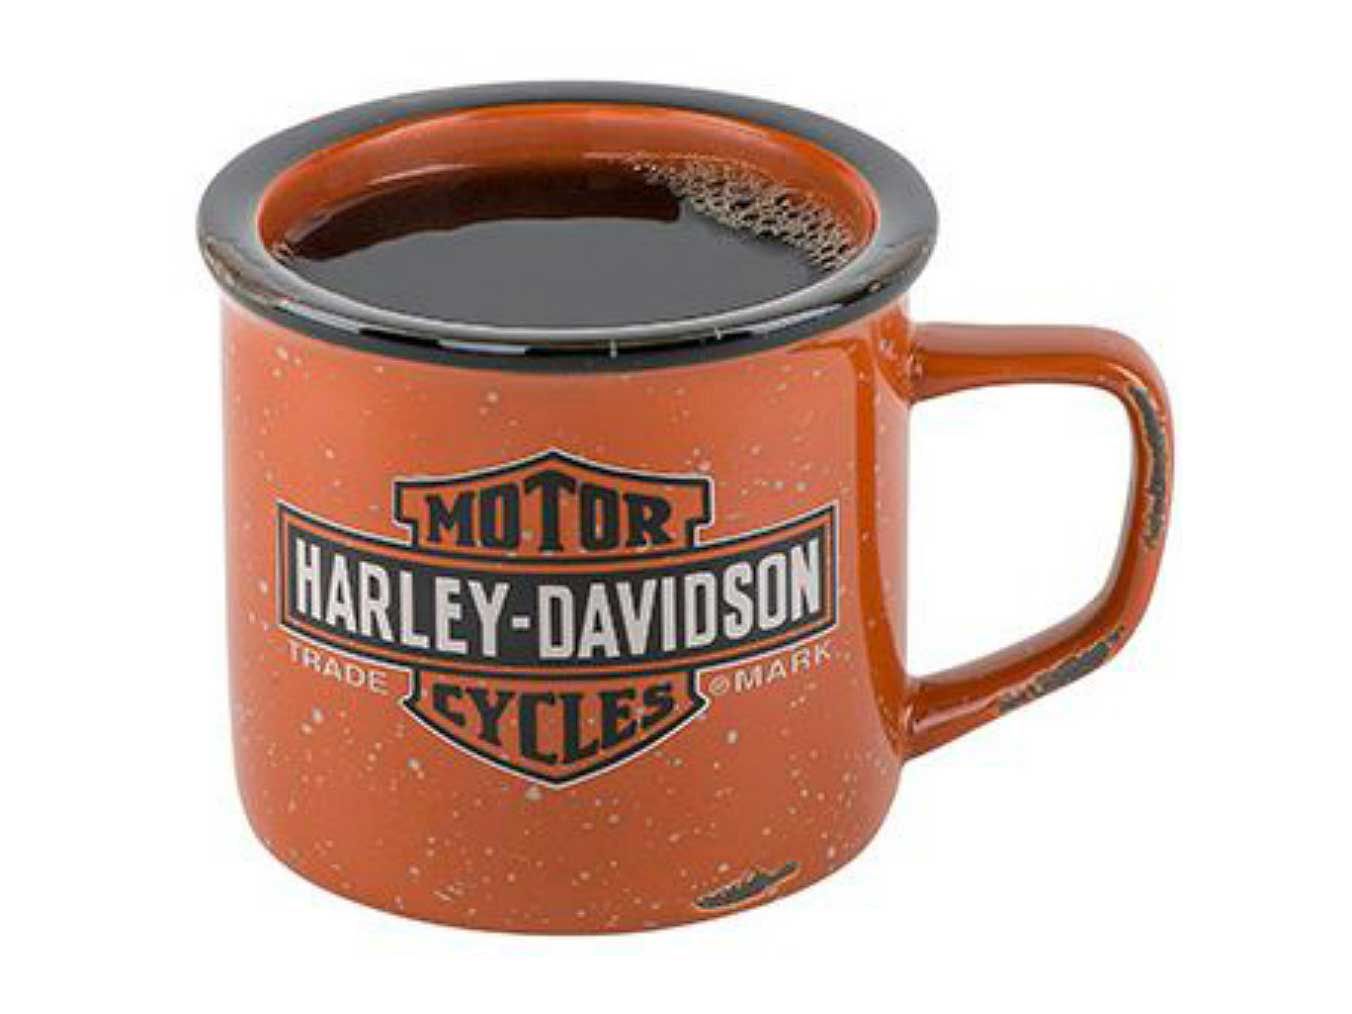 Harley Davidson Gifts Near Me Promotion Off62